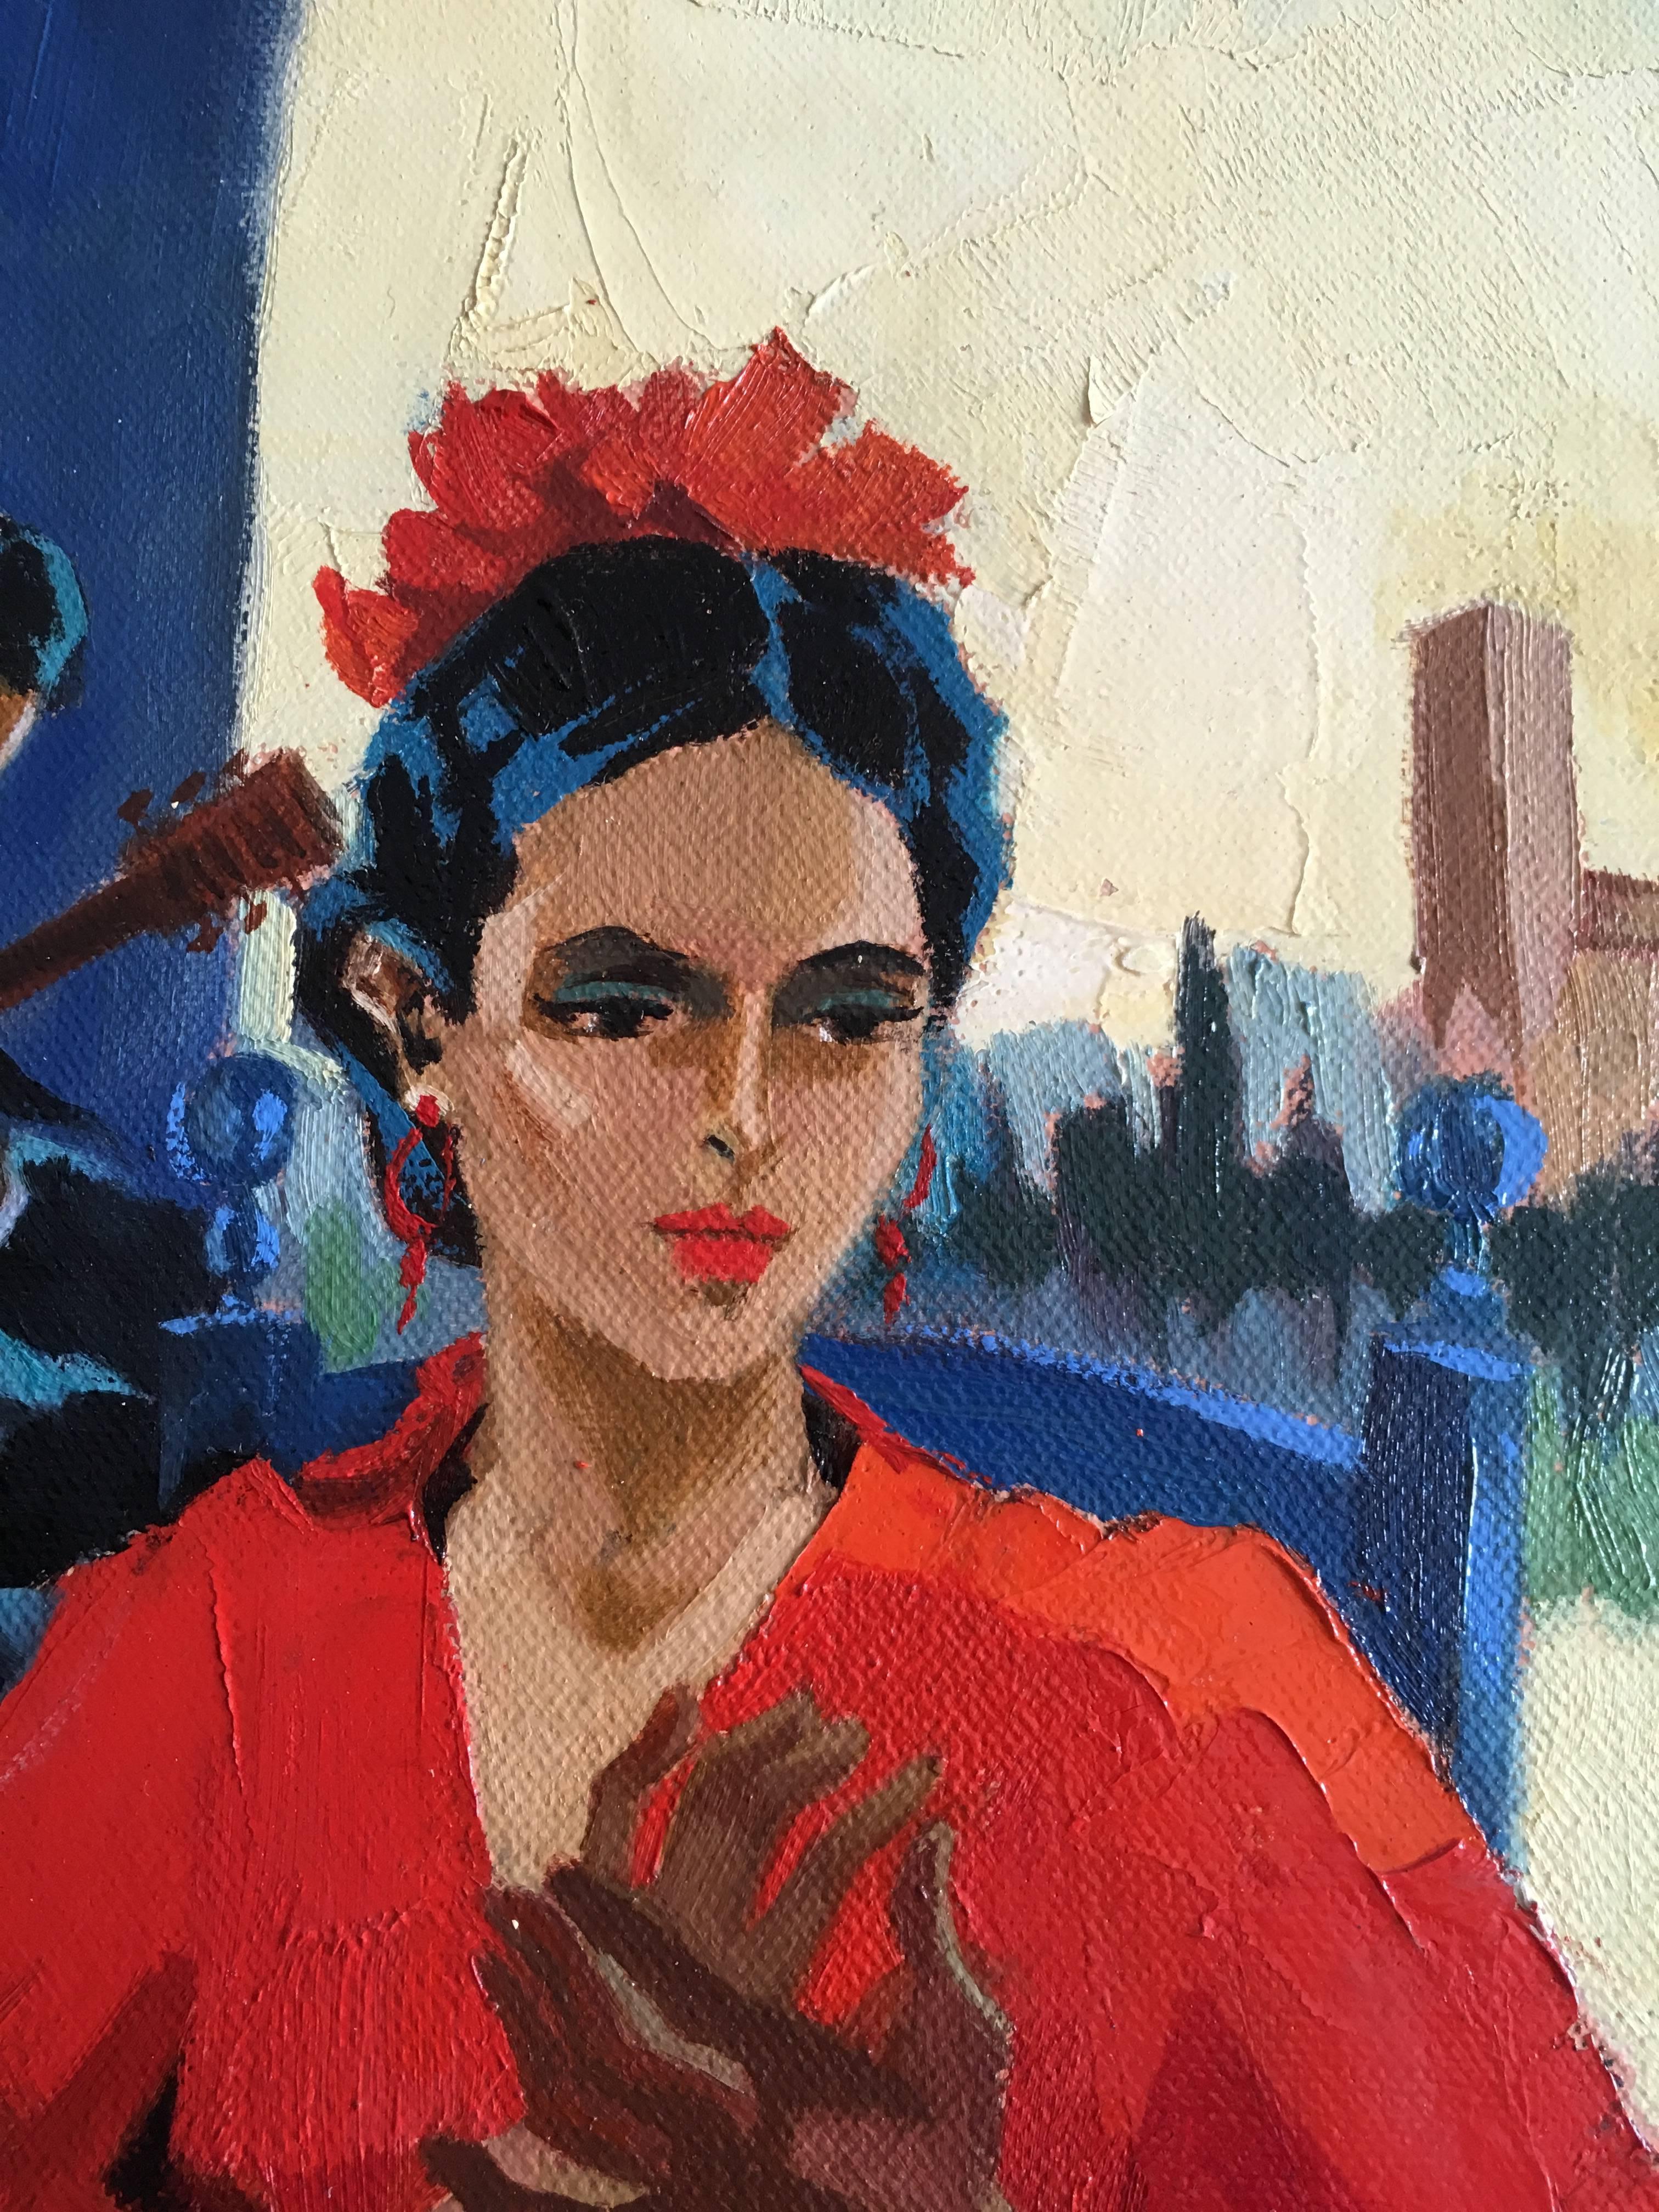 Bulerias, flamenco dance, oil on canvas - Painting by Jori Duran